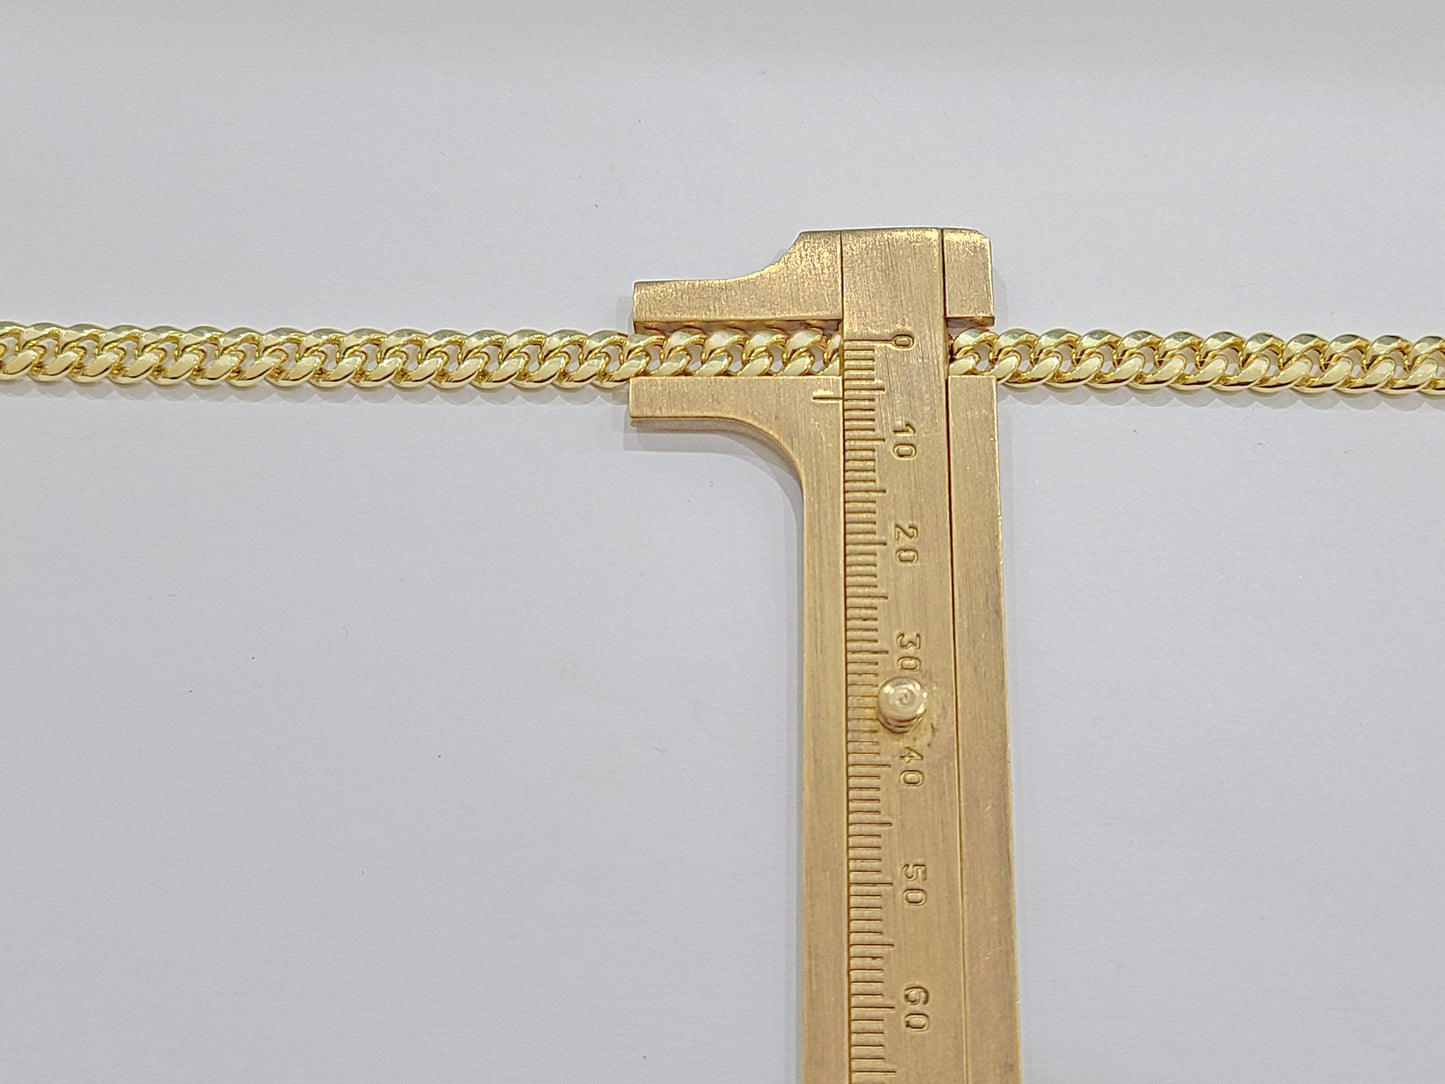 Real 10k Yellow Gold Miami Cuban Link Bracelet 8.5" inch 6mm 10kt Box Lock Men